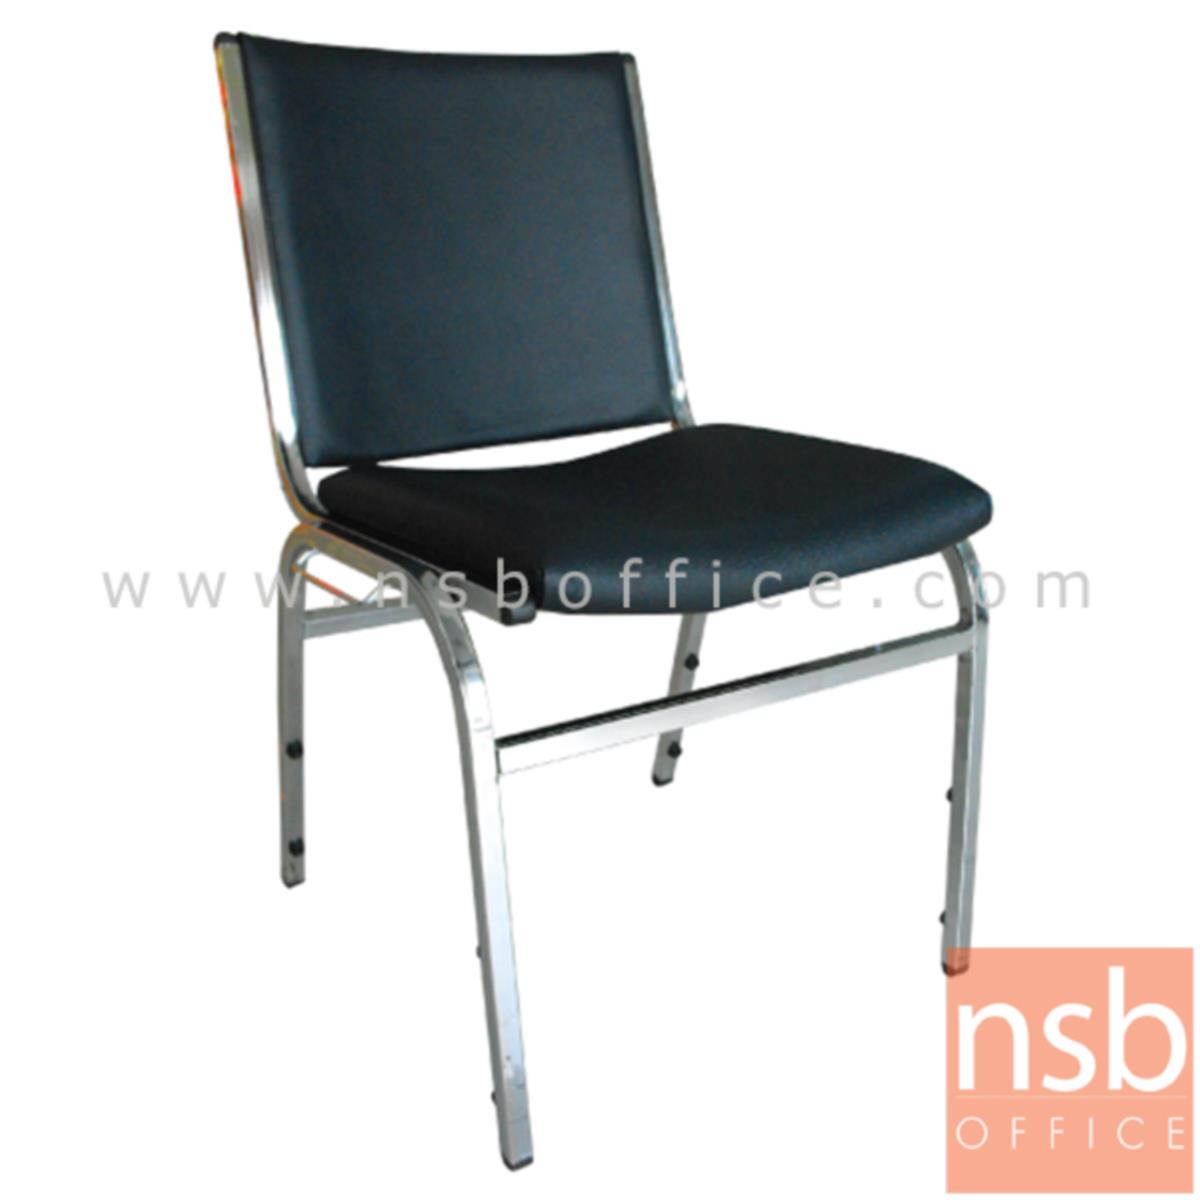 B05A123:เก้าอี้อเนกประสงค์ รุ่น Blonsky (บลอนสกี้)  ขาเหล็กชุบโครเมี่ยม